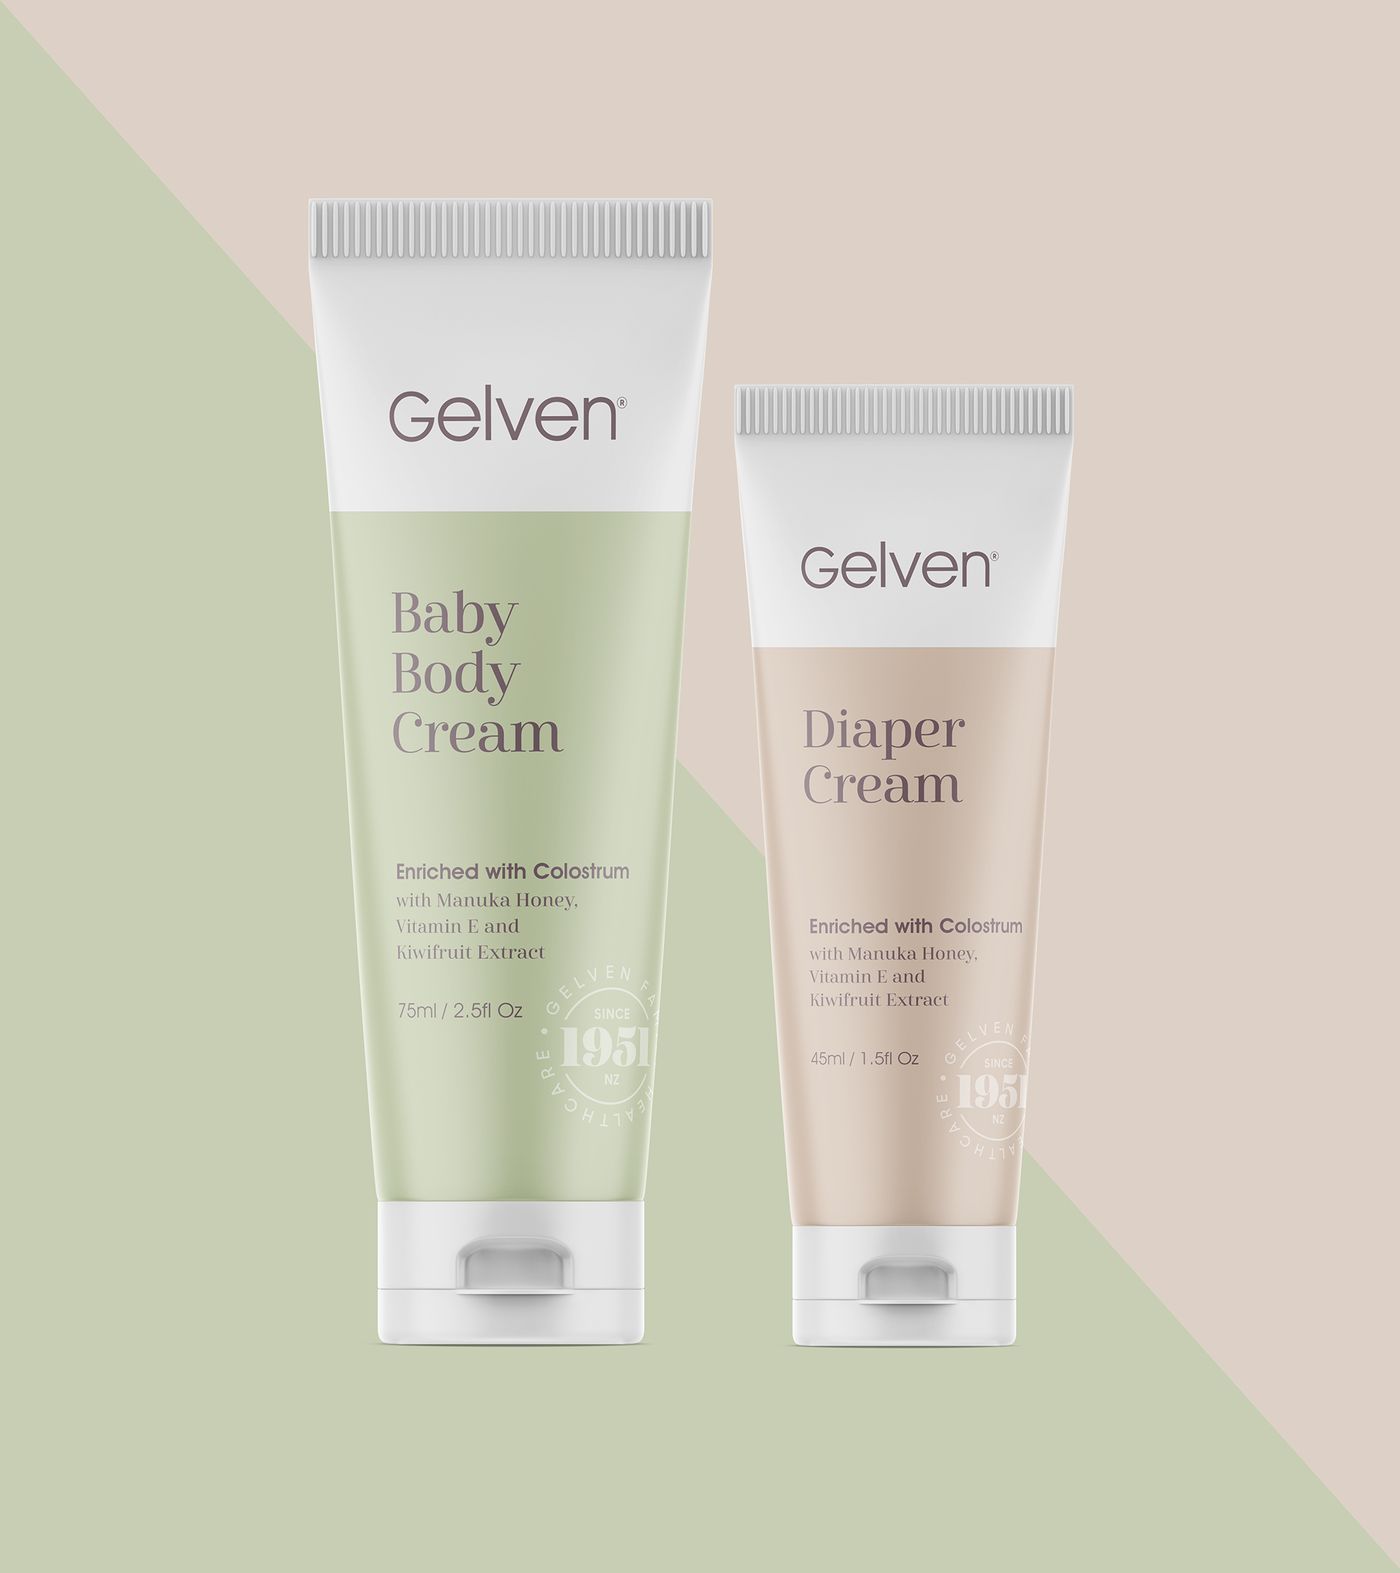 Gelven baby body and diaper creams